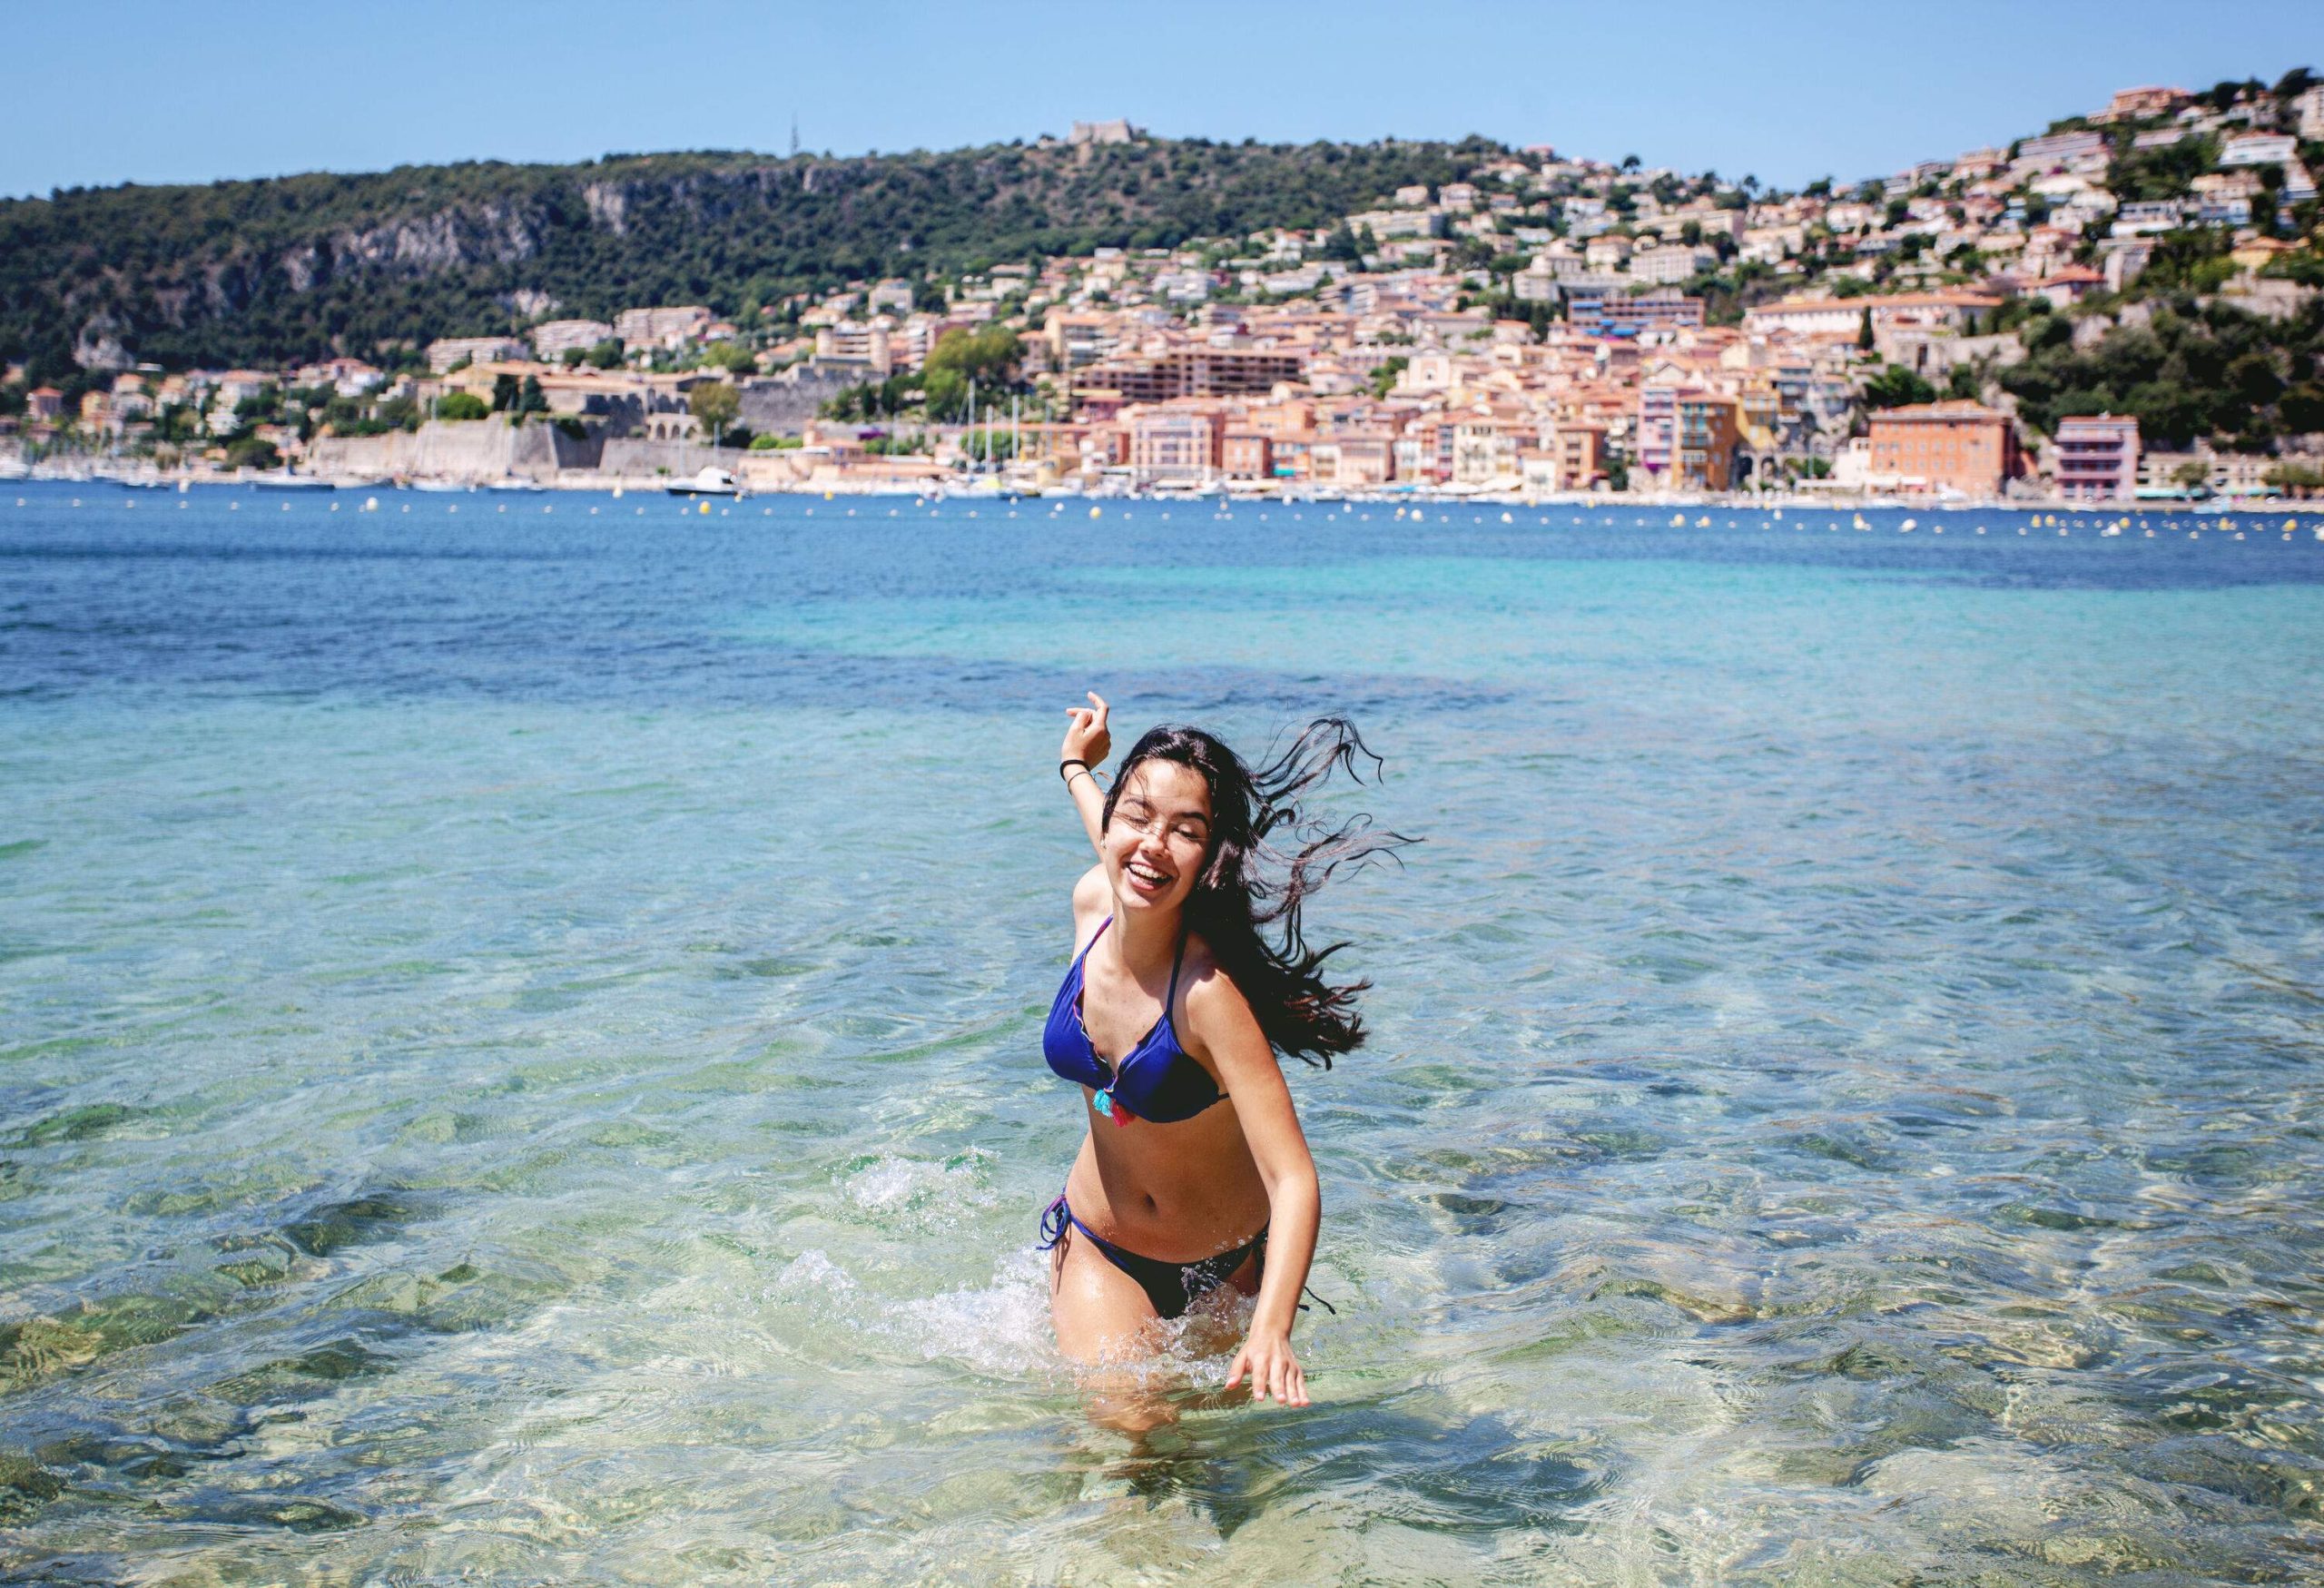 A woman in a blue bikini wading in the ocean.